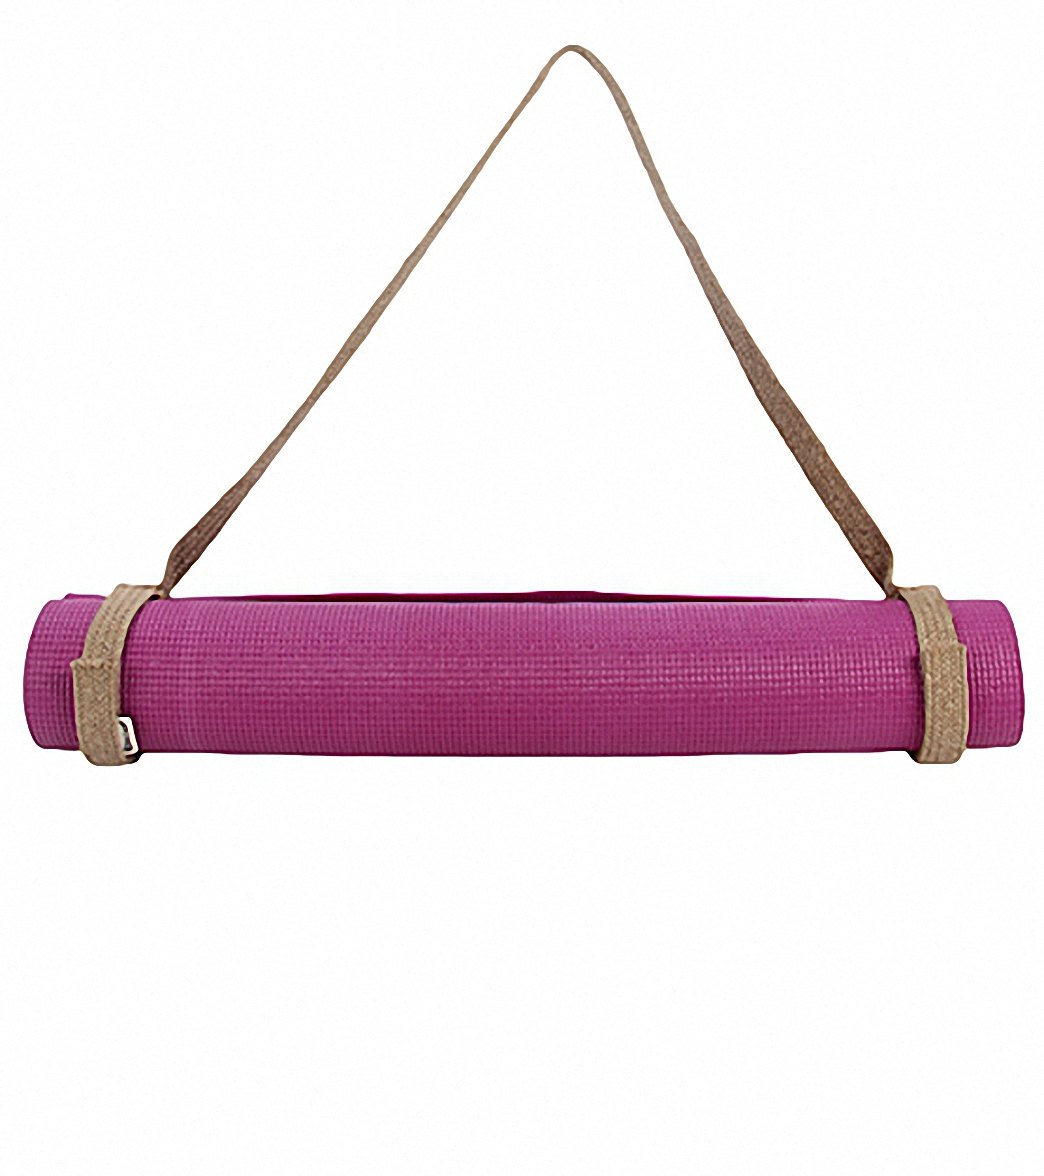 Gaiam - Gaiam Yoga Strap, Purple, Cotton, 6 Feet, Shop